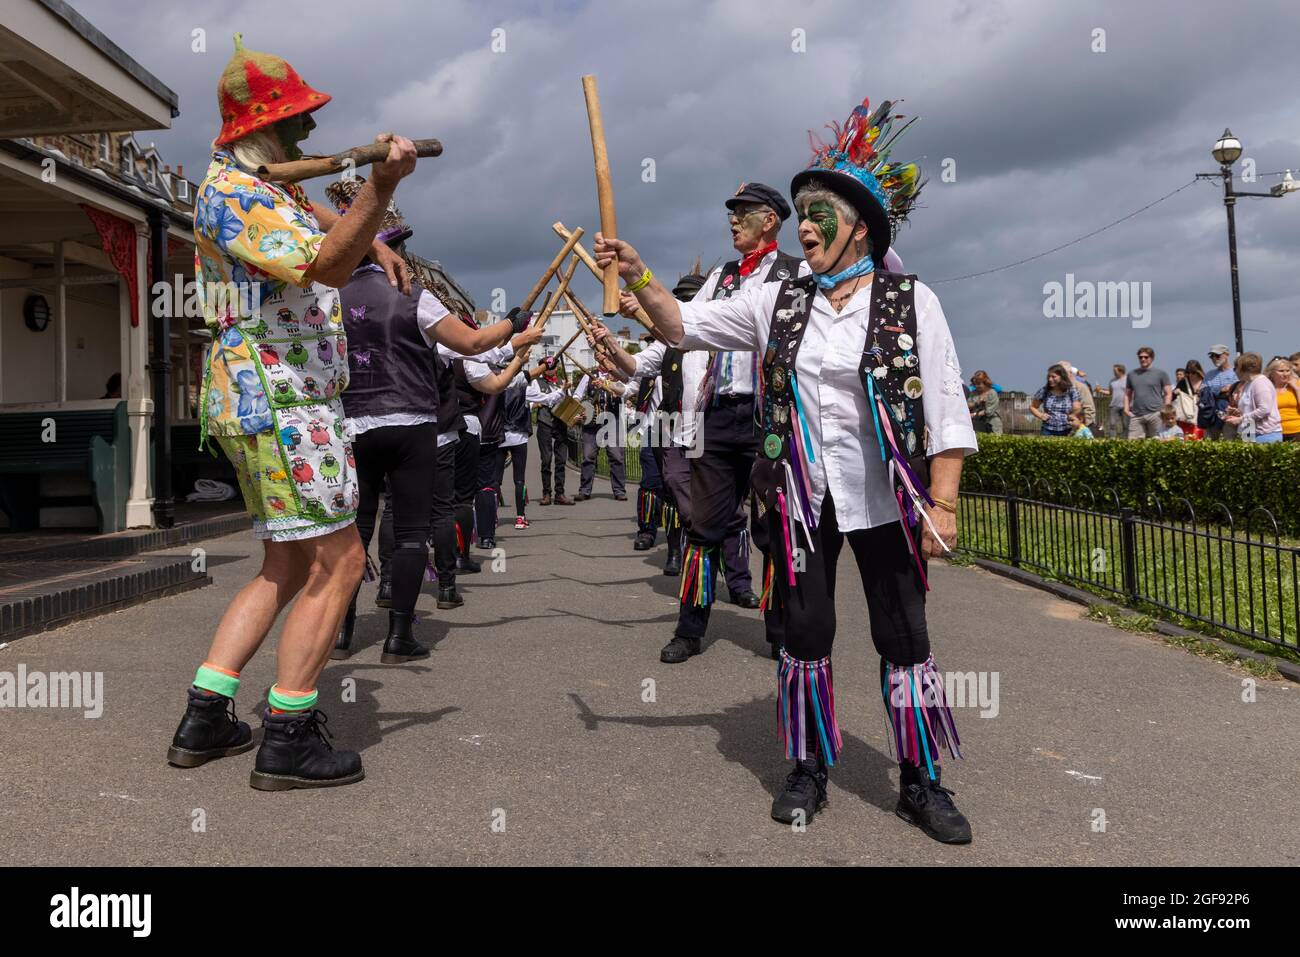 Dead Horse Morris performing morris dances in Victoria Gardens during Broadstairs Folk Week, August 2021 Stock Photo